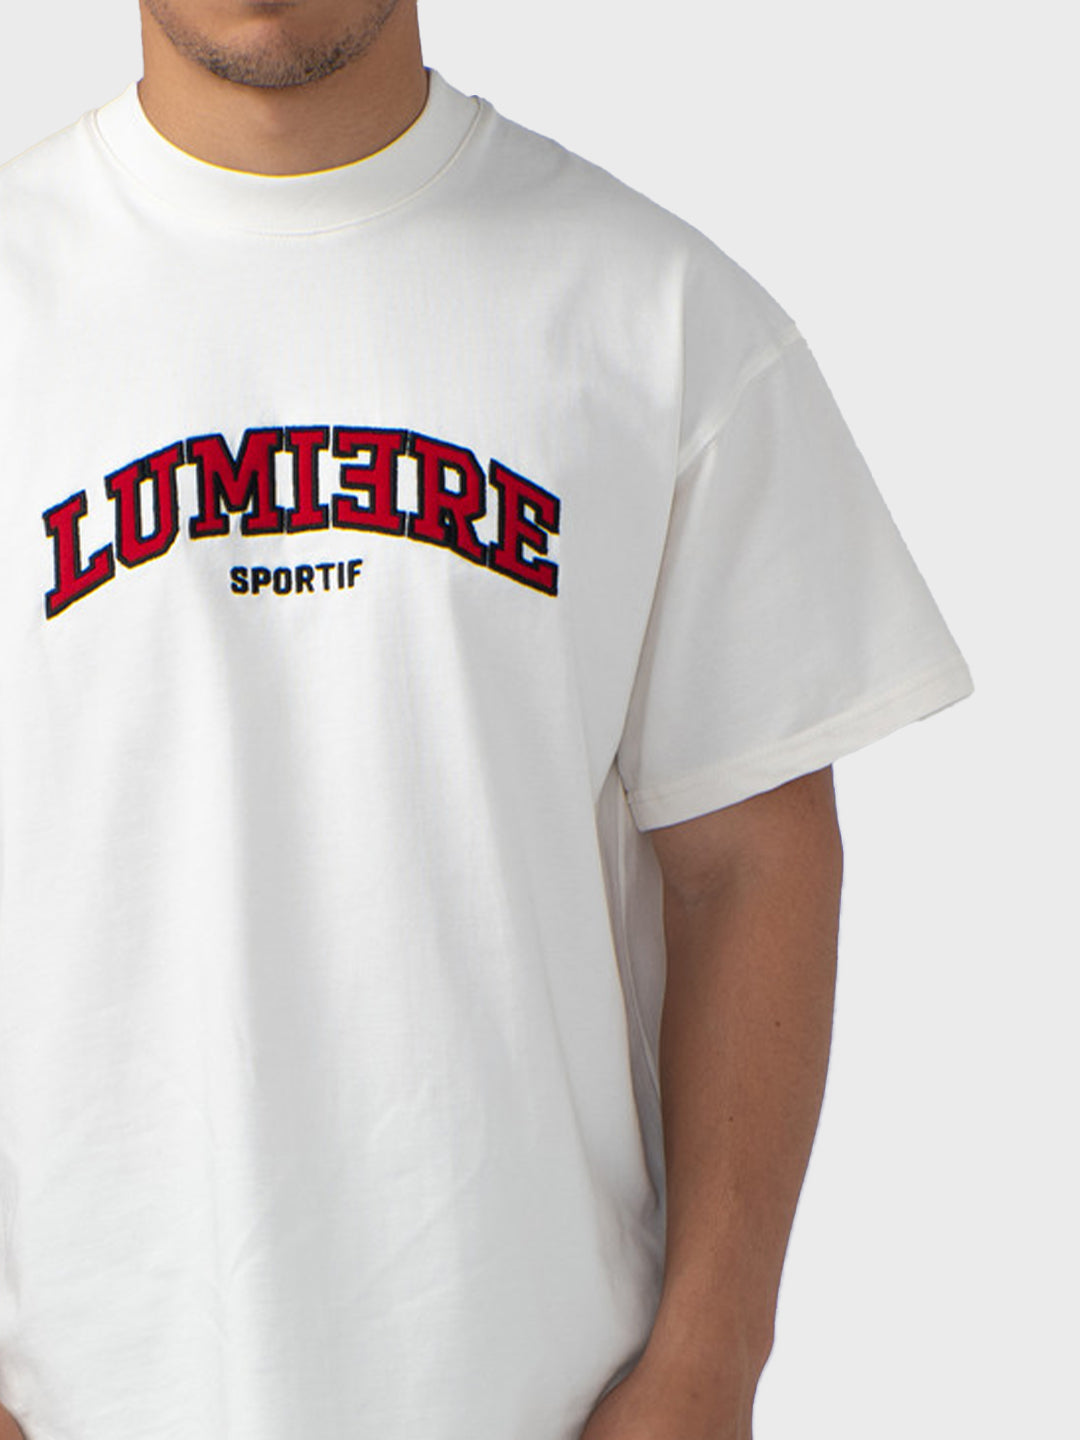 lumi3re t-shirt rood